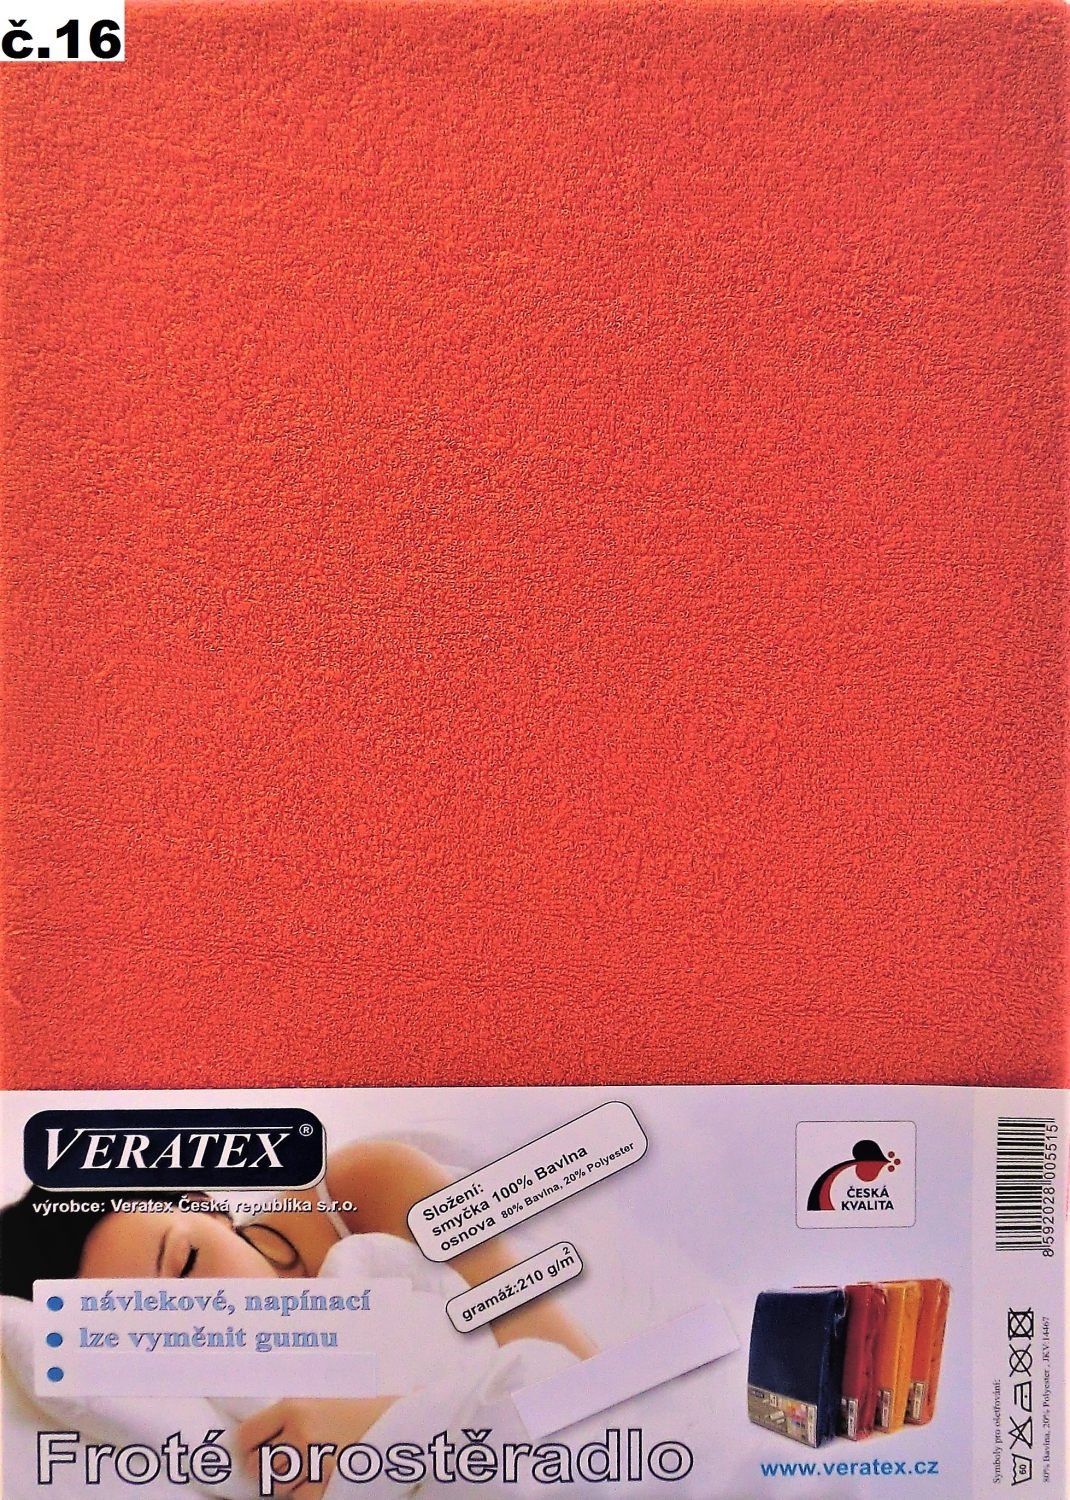 Veratex Froté prostěradlo 200x240 cm (č.16 malina) 200 x 240 cm